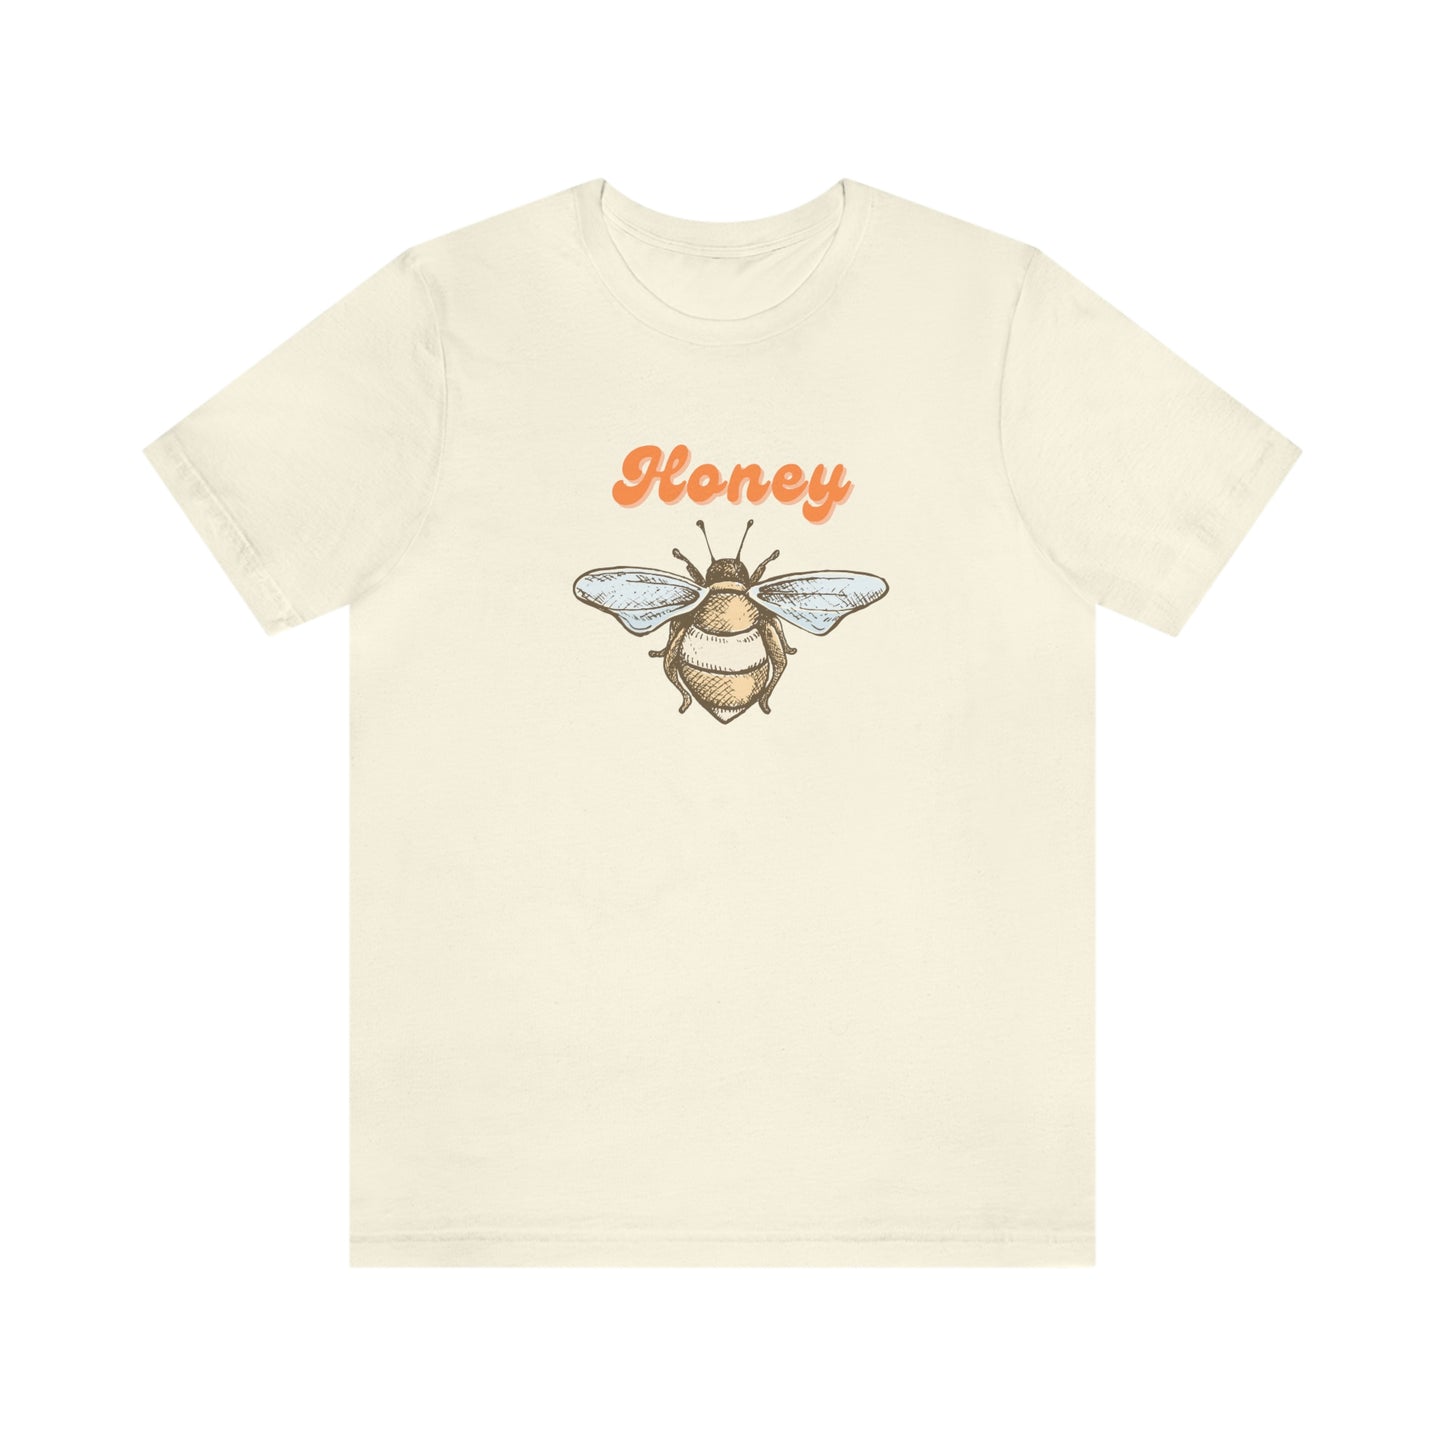 "Honey" Unisex Jersey Short Sleeve Tee